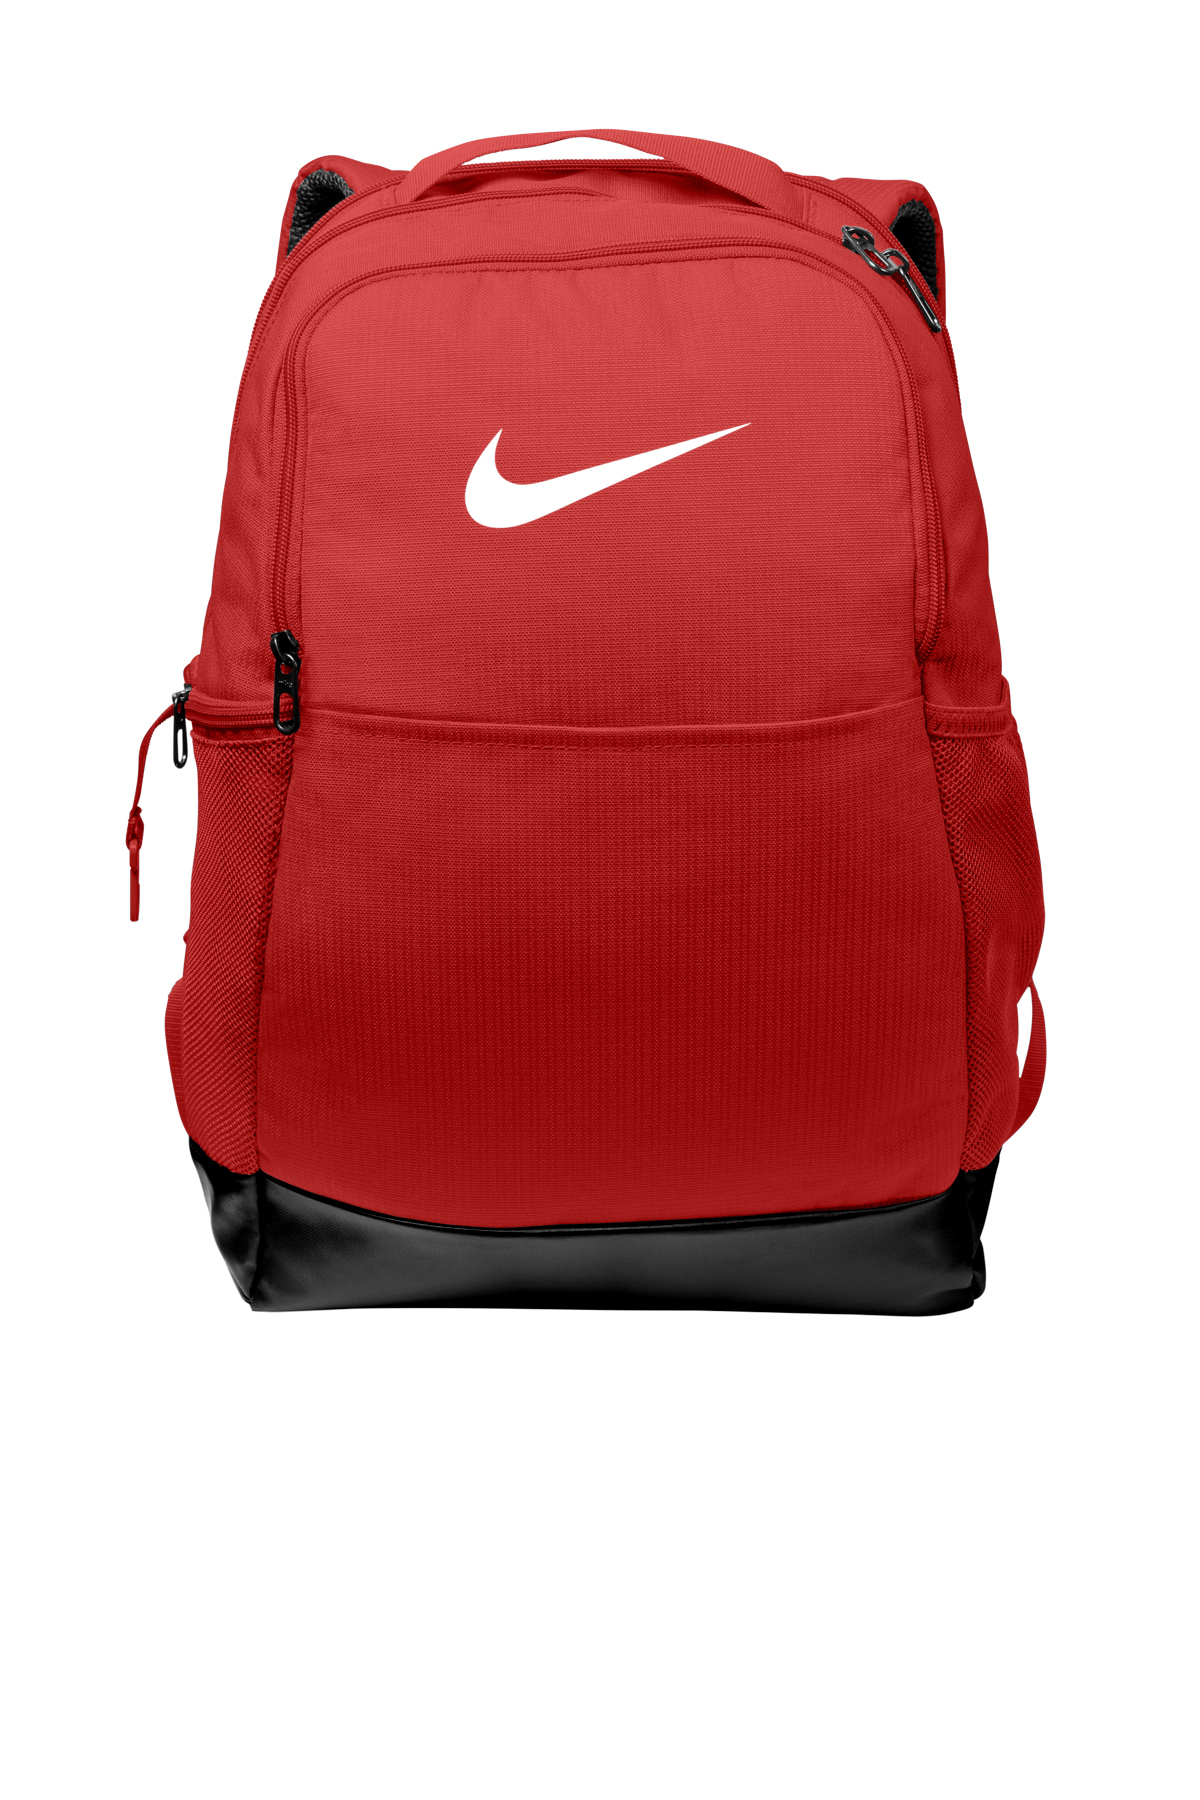 NIKE Brasilia Medium Backpack, Flint Grey/Black/White, Misc : Nike:  : Clothing, Shoes & Accessories